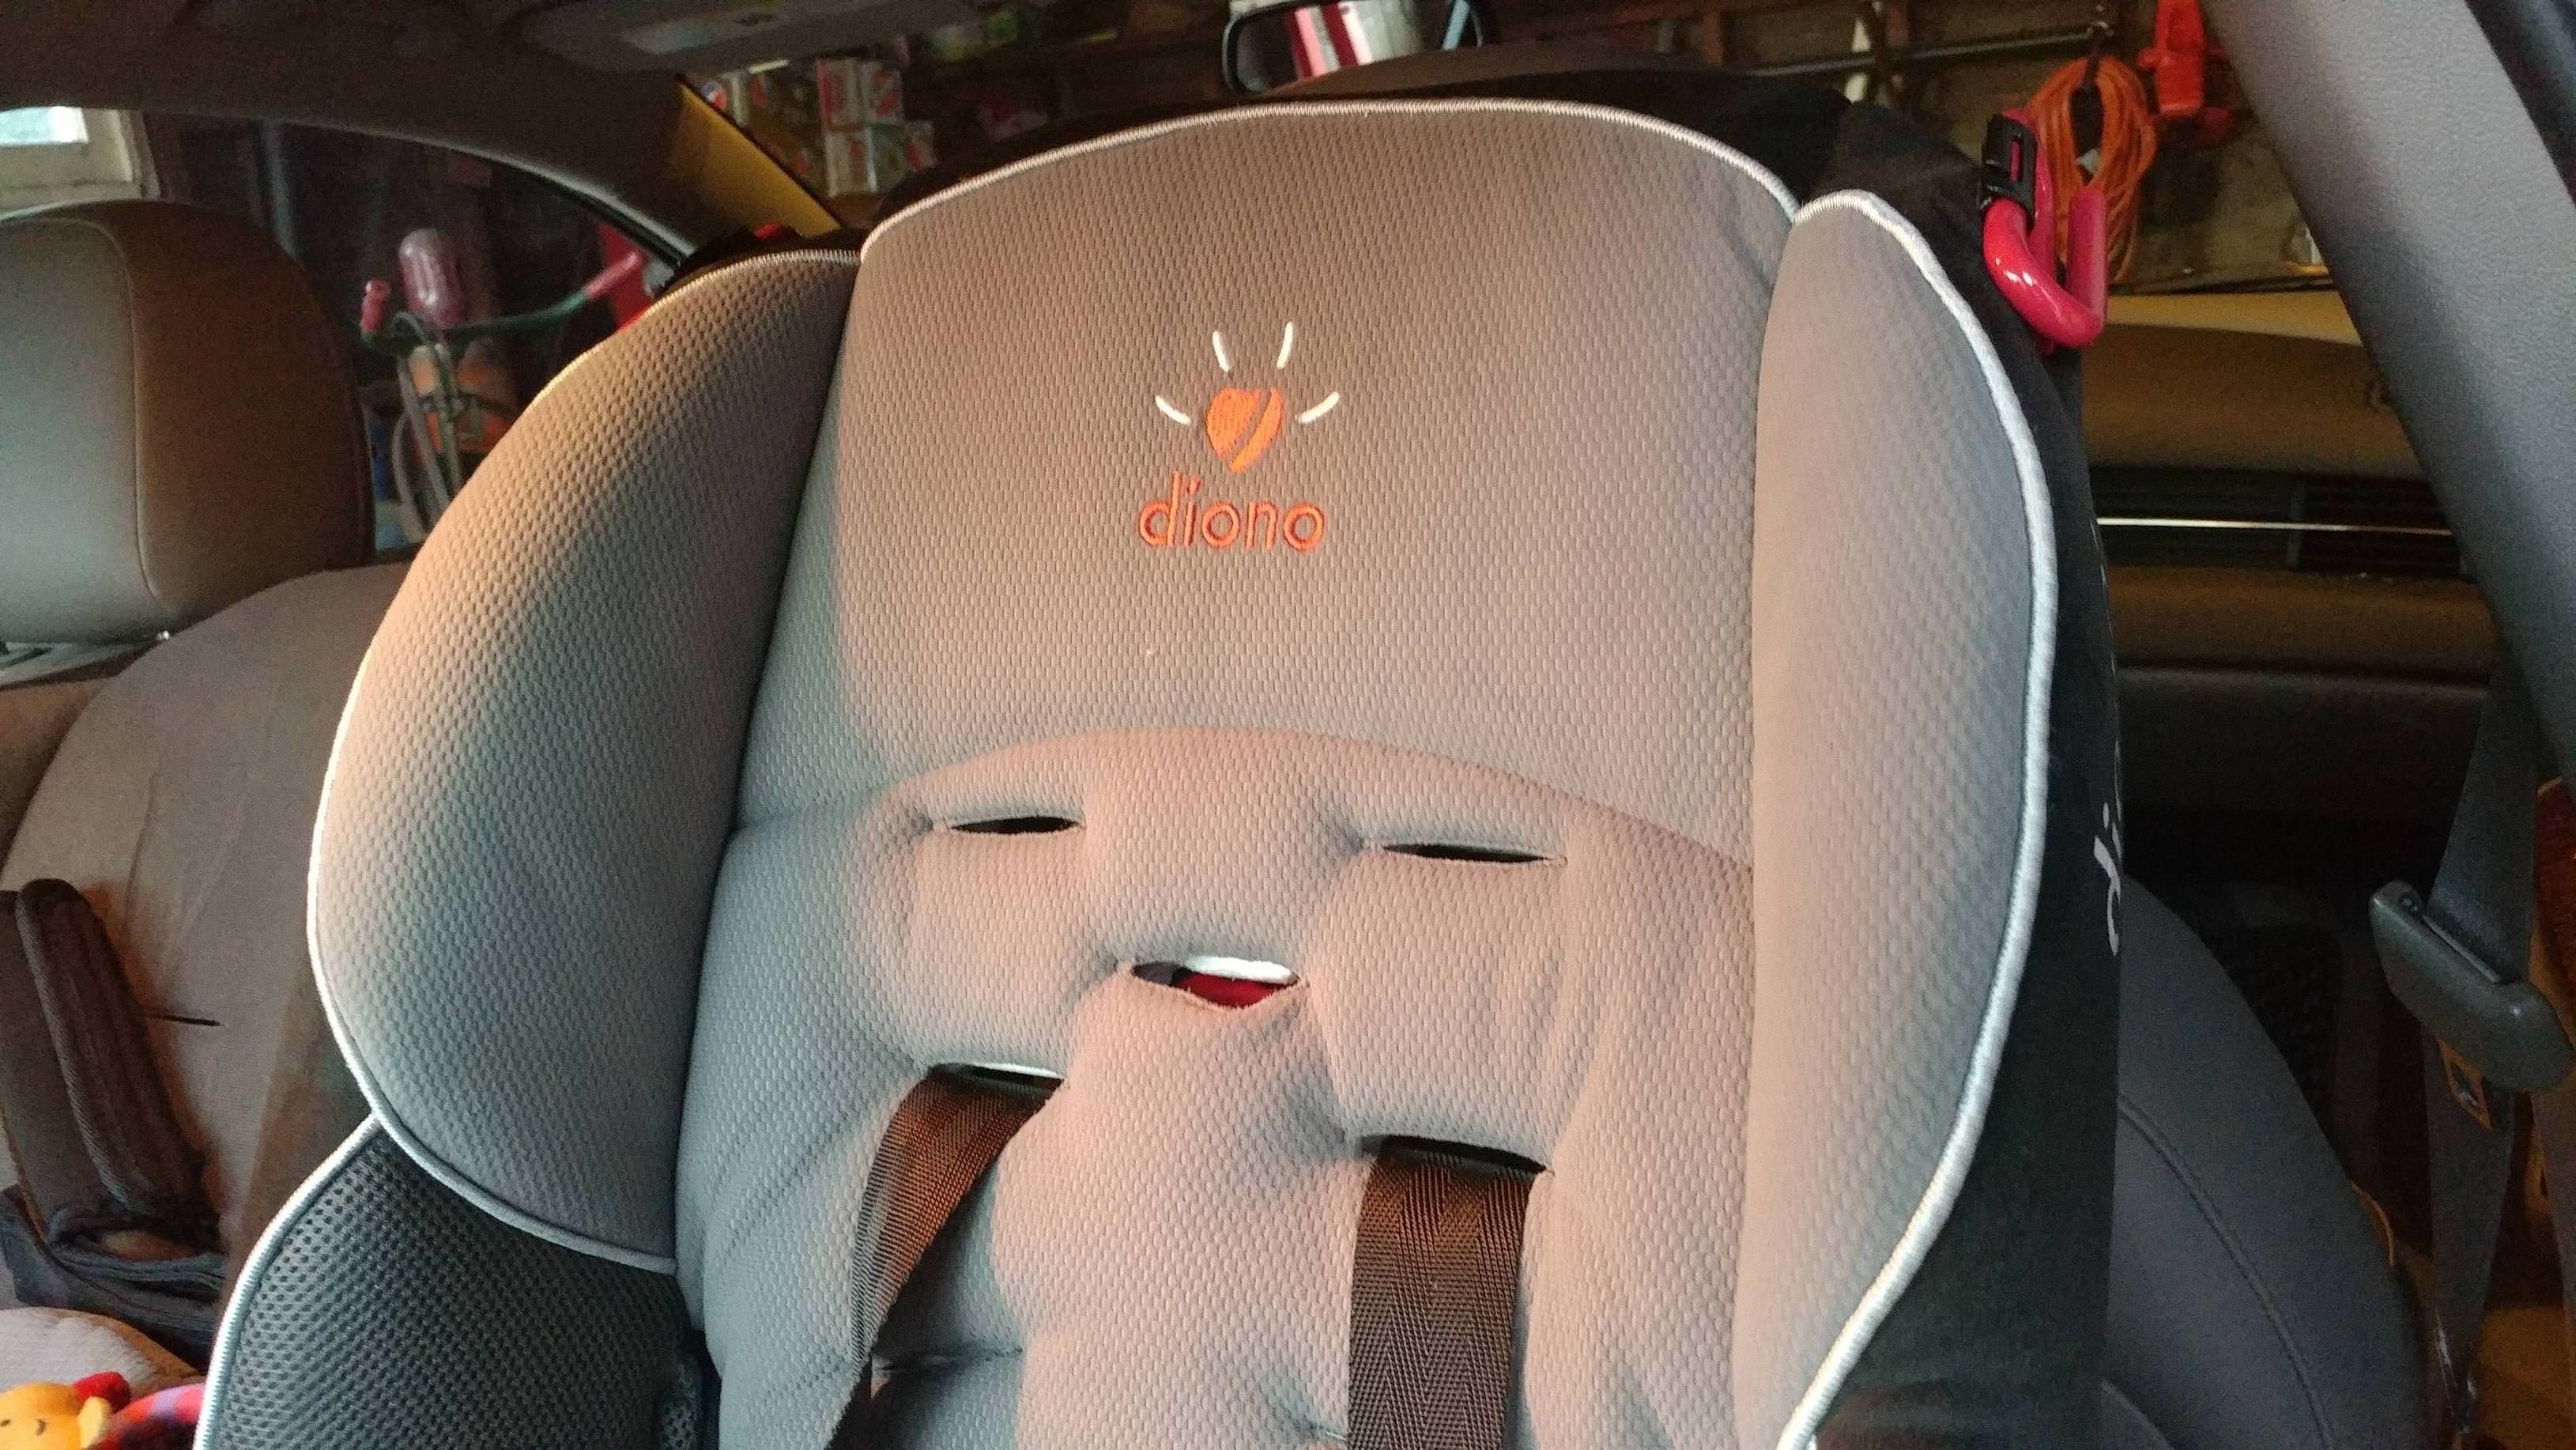 This car seat is lit AF